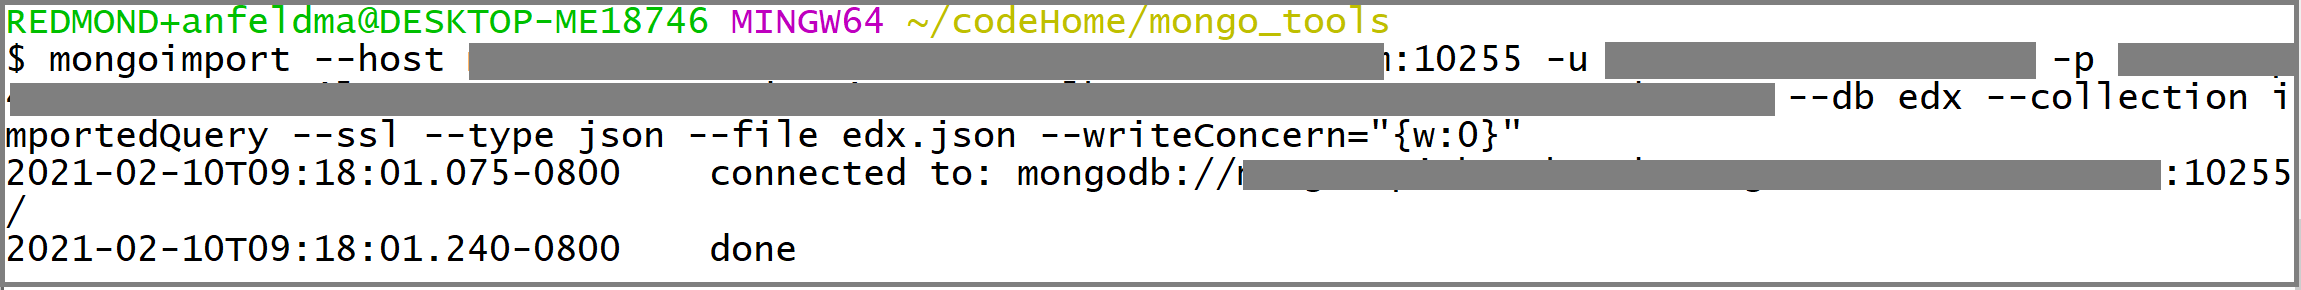 Captura de ecrã da chamada mongoimport.